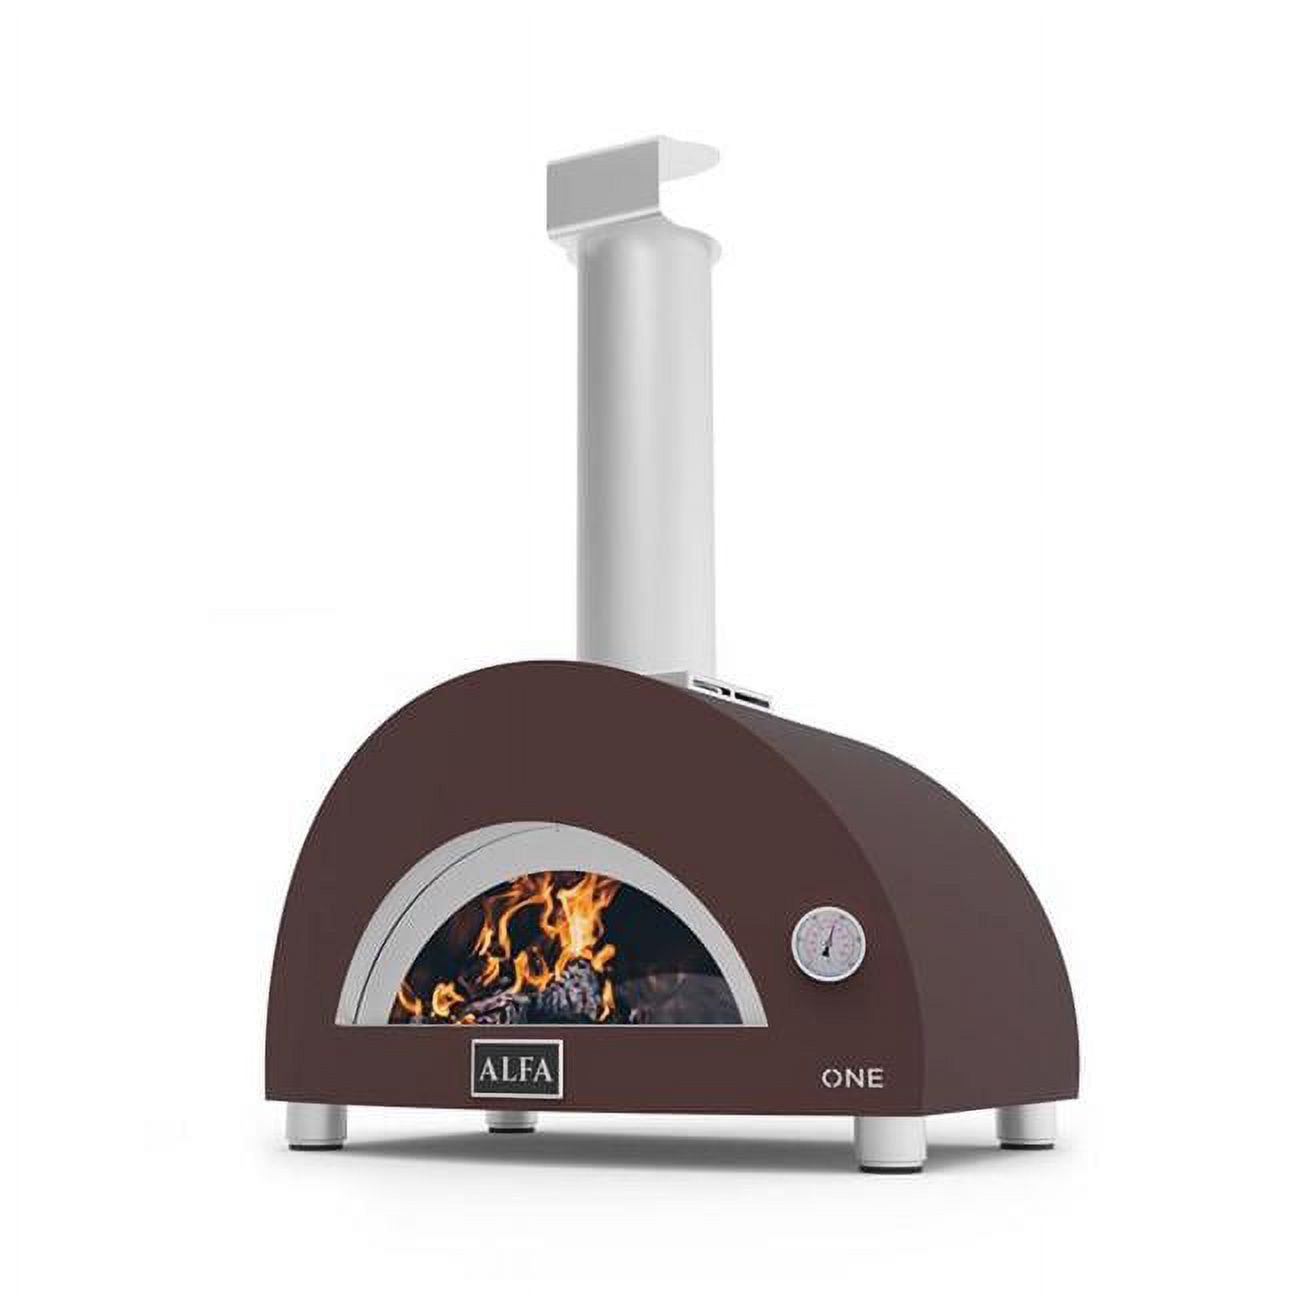 Alfa Nano 29 in. Wood Outdoor Pizza Oven Copper - image 1 of 3